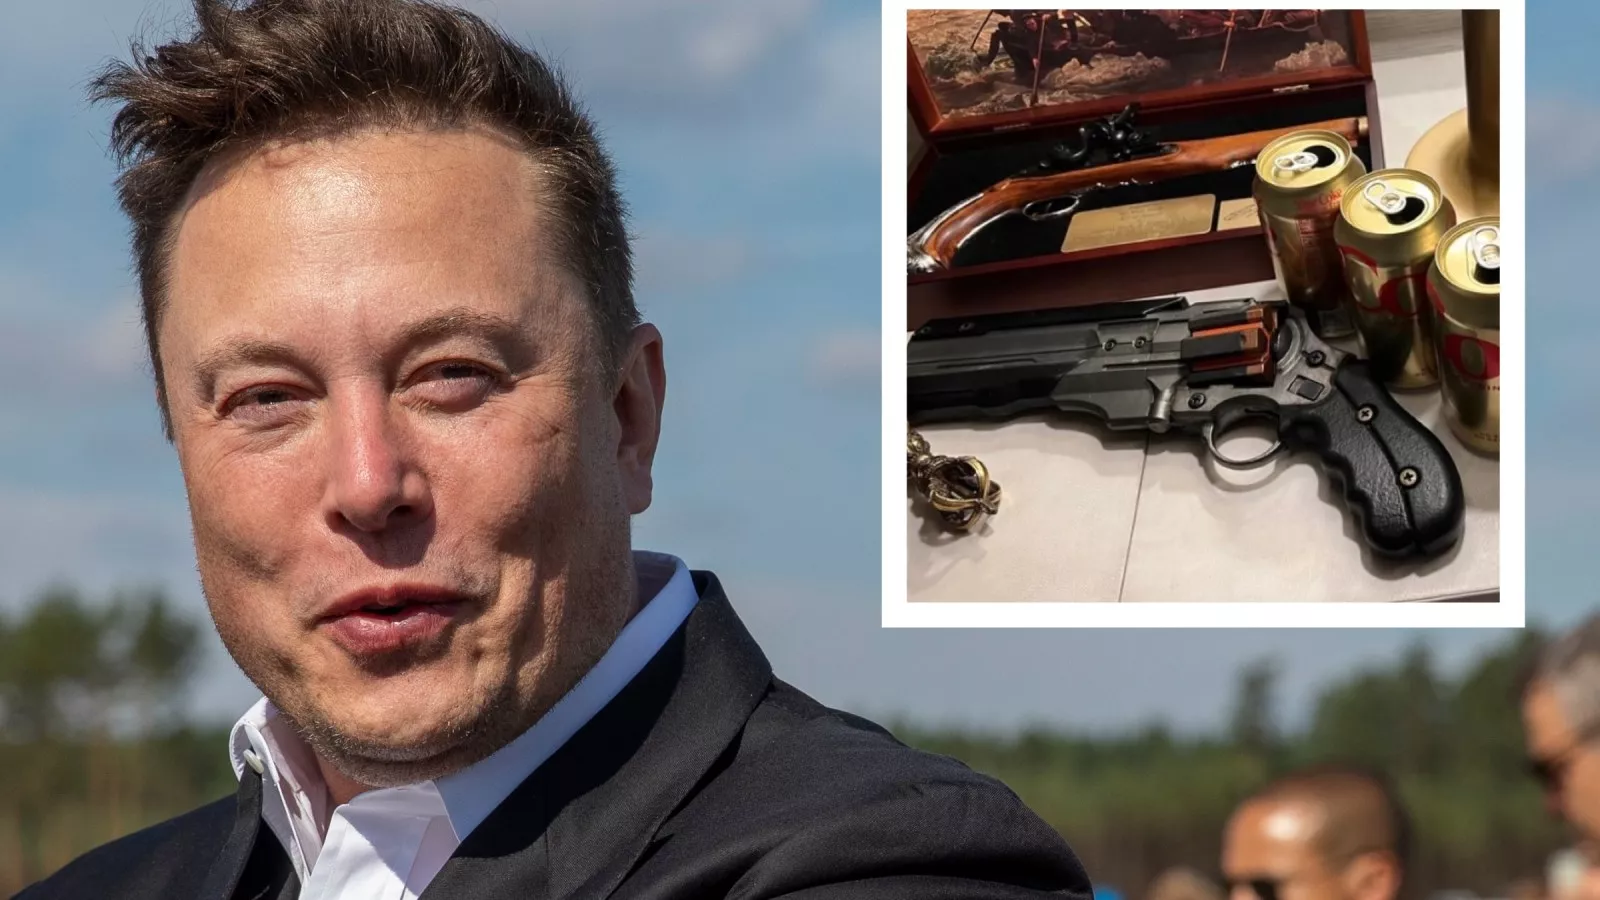 Elon Musk Tweets Photo of Guns: 'My Bedside Table'